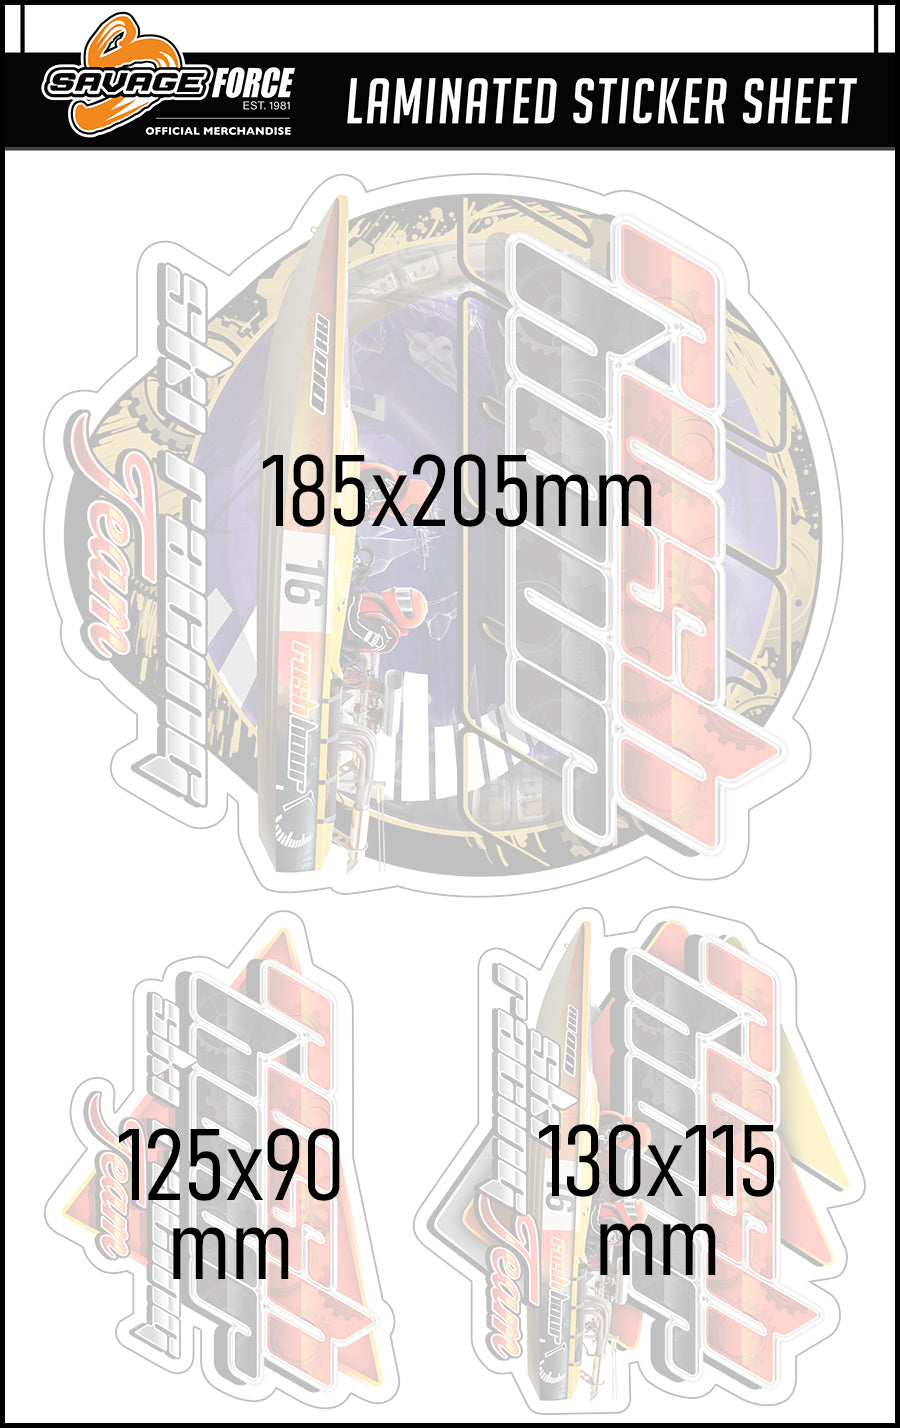 Rush Hour Ski Racing Team Sticker Sheet